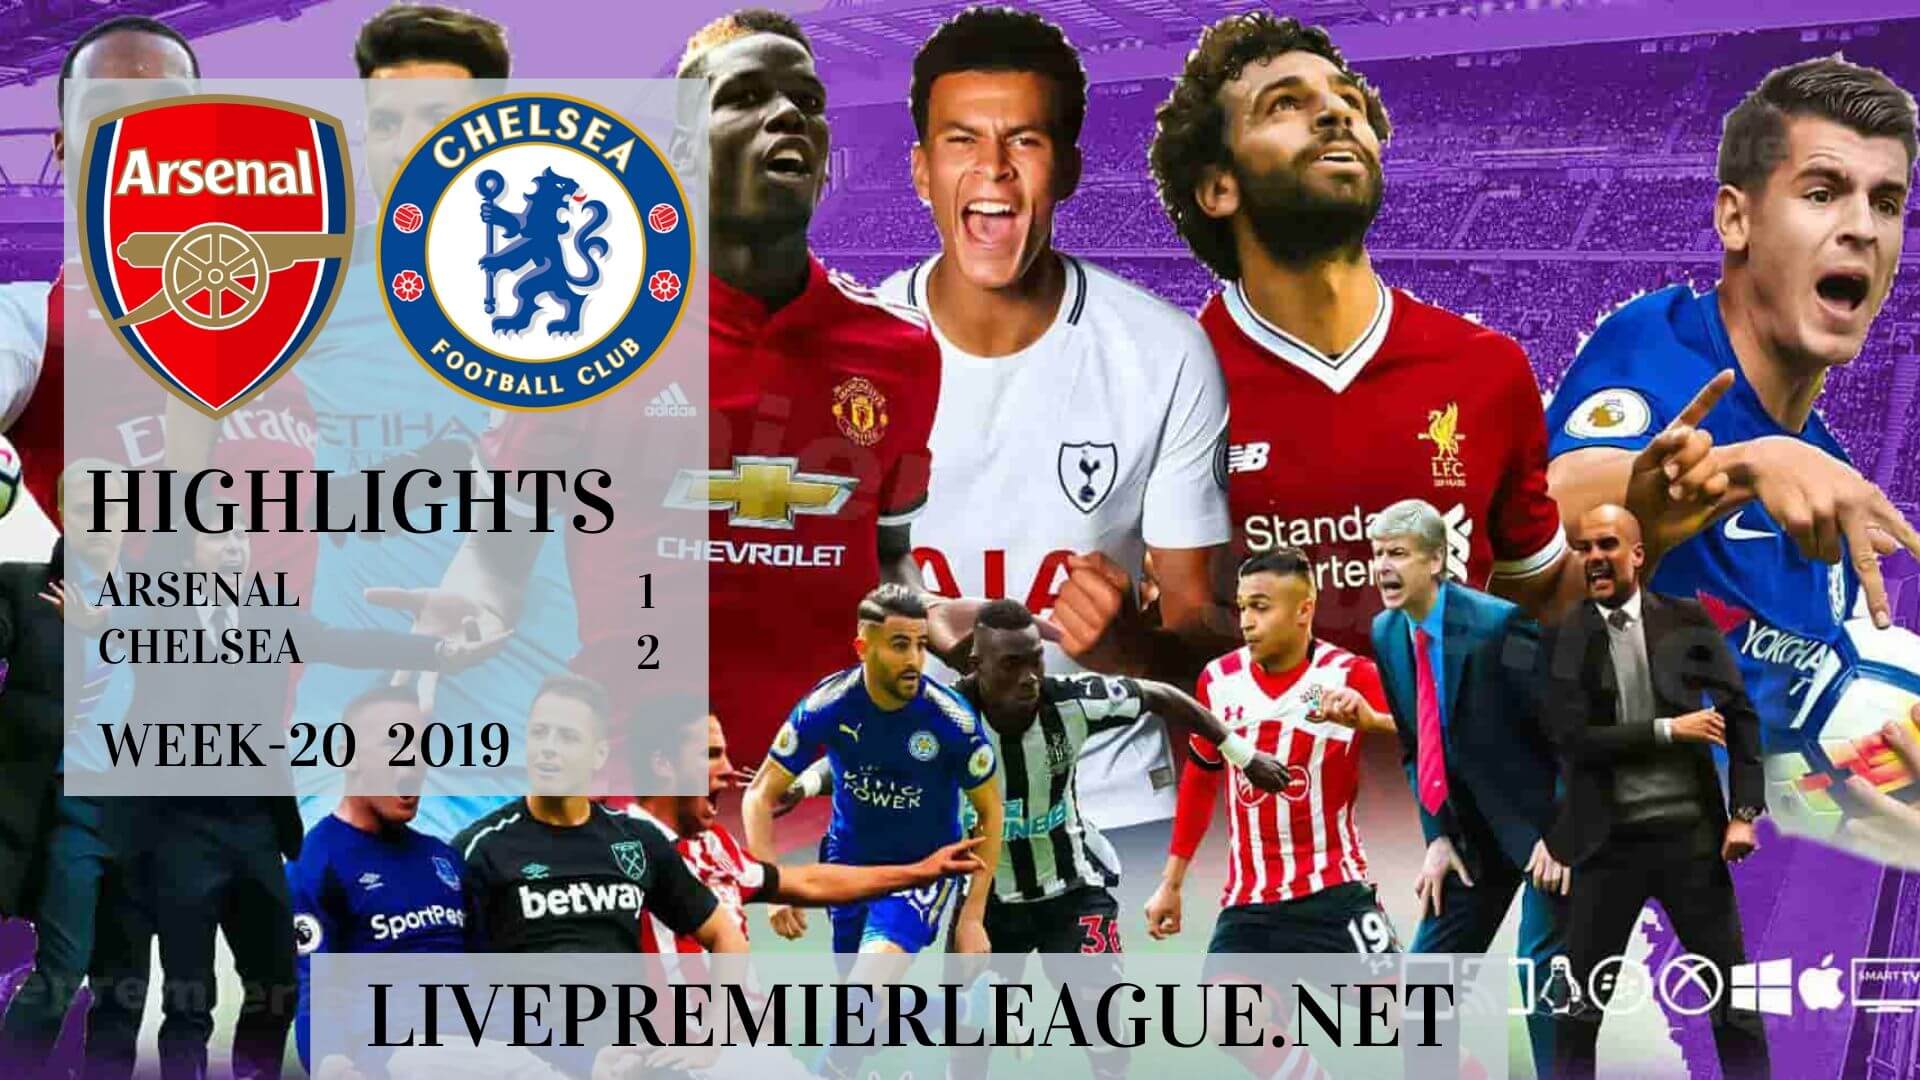 Arsenal Vs Chelsea Highlights 2019 Week 20